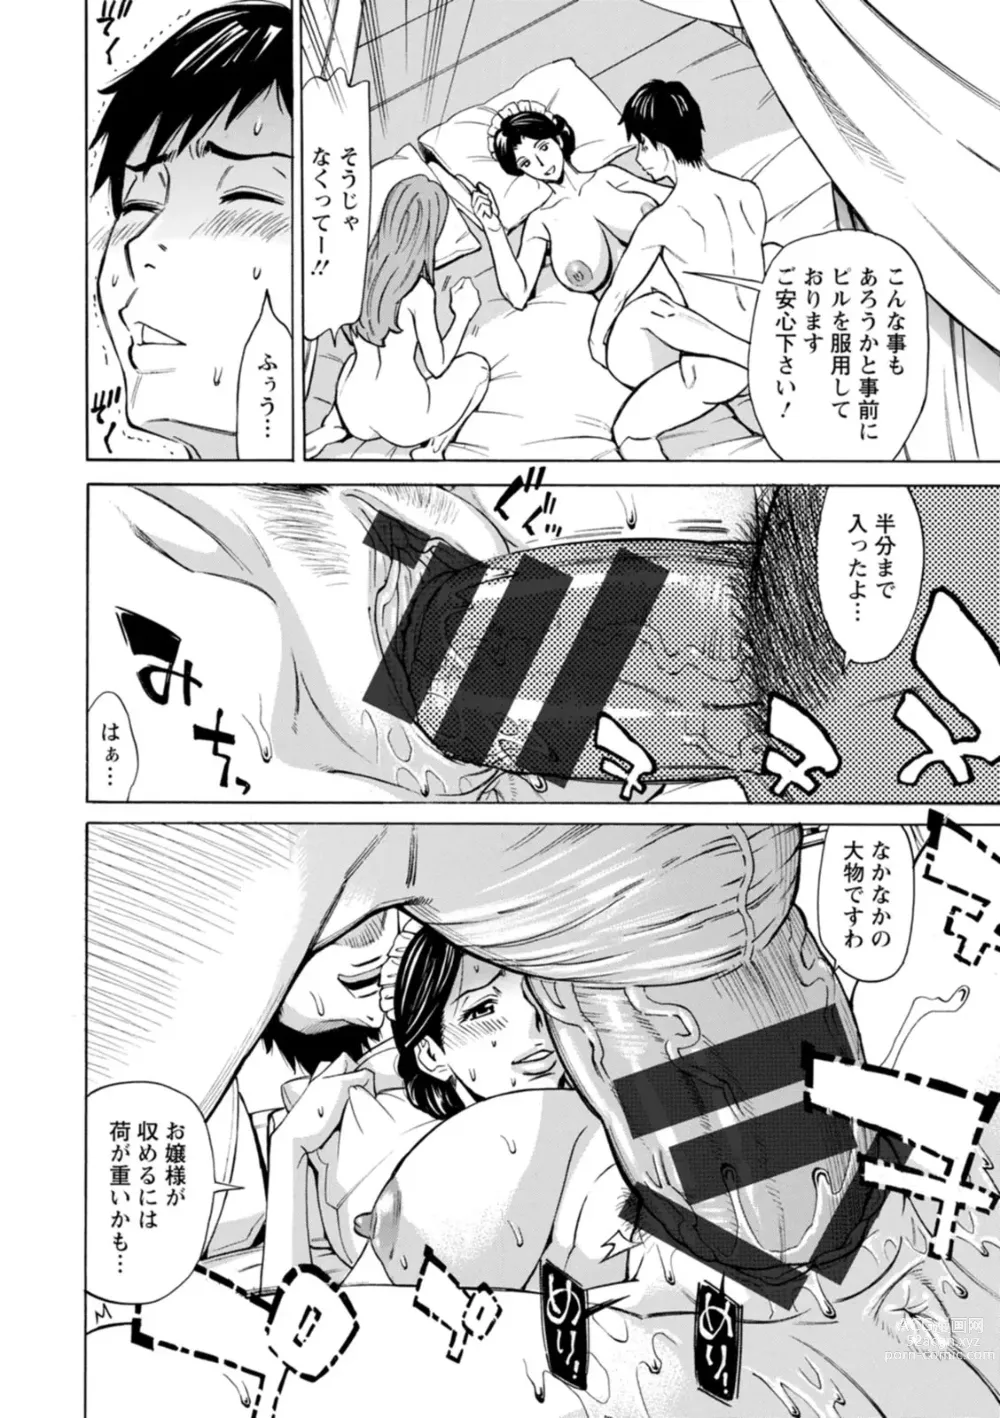 Page 178 of manga Furidashinimodoru - Back to Square One -